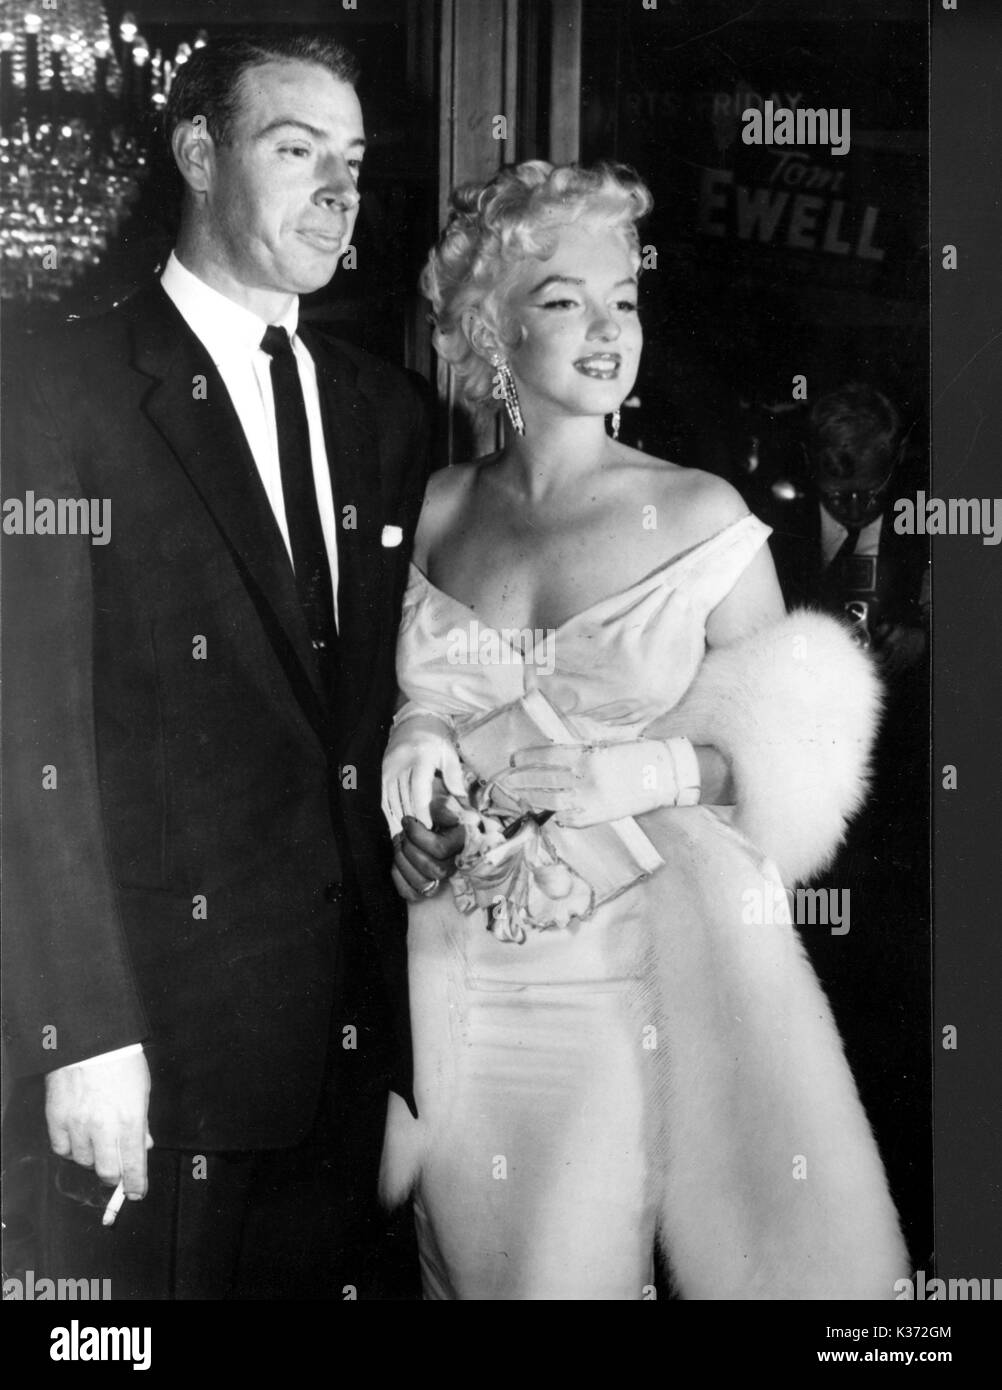 MARILYN MONROE avec son deuxième mari, Joe DiMaggio, 1954 Banque D'Images